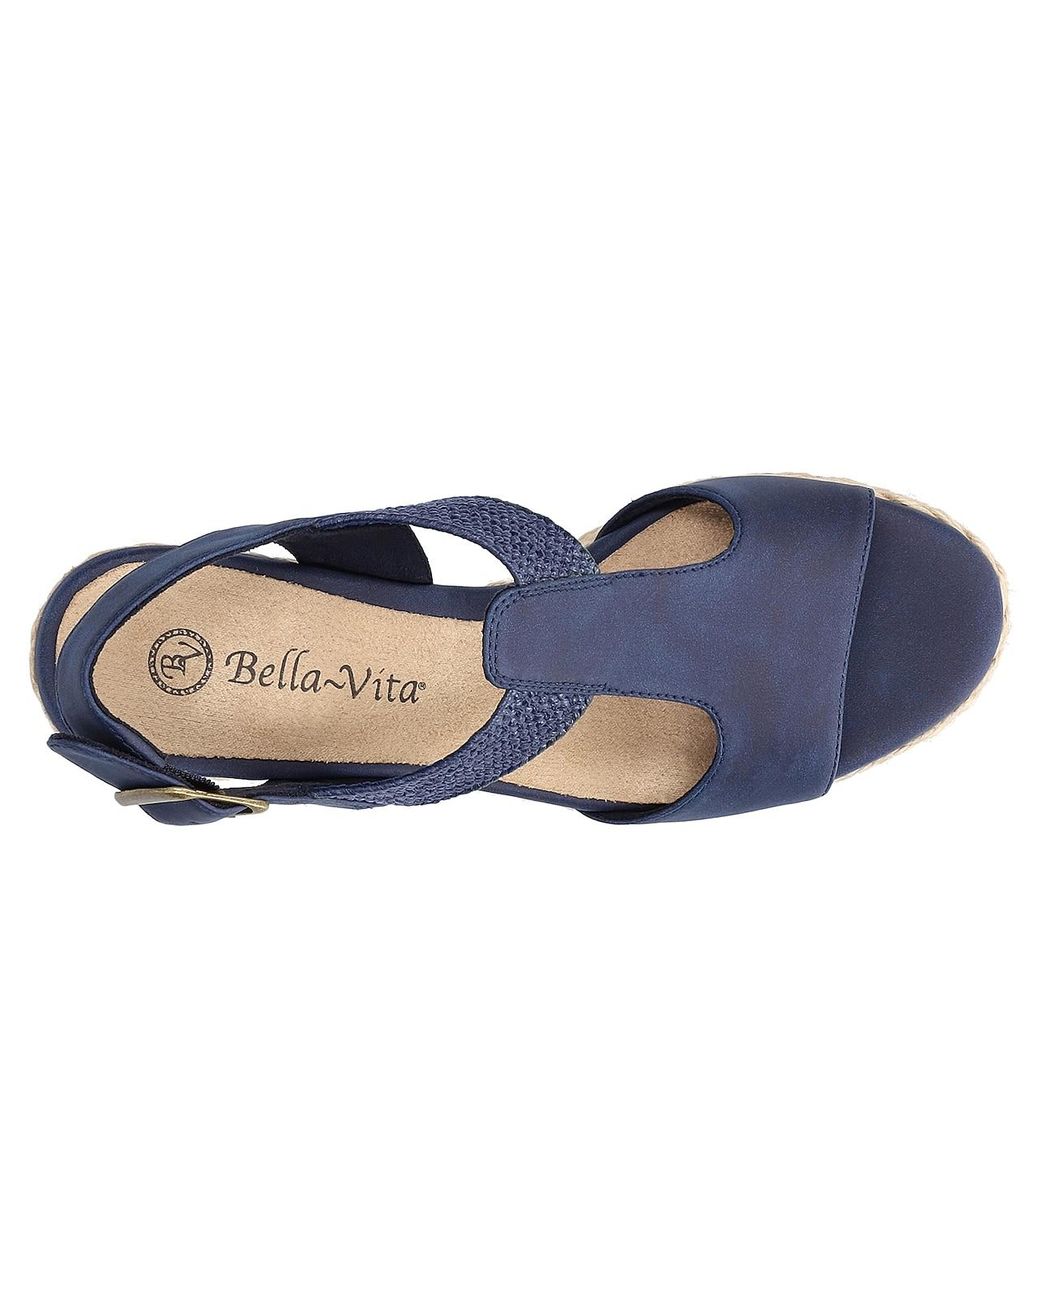 Bella Vita Zayla Espadrille Wedge Sandal in Blue | Lyst